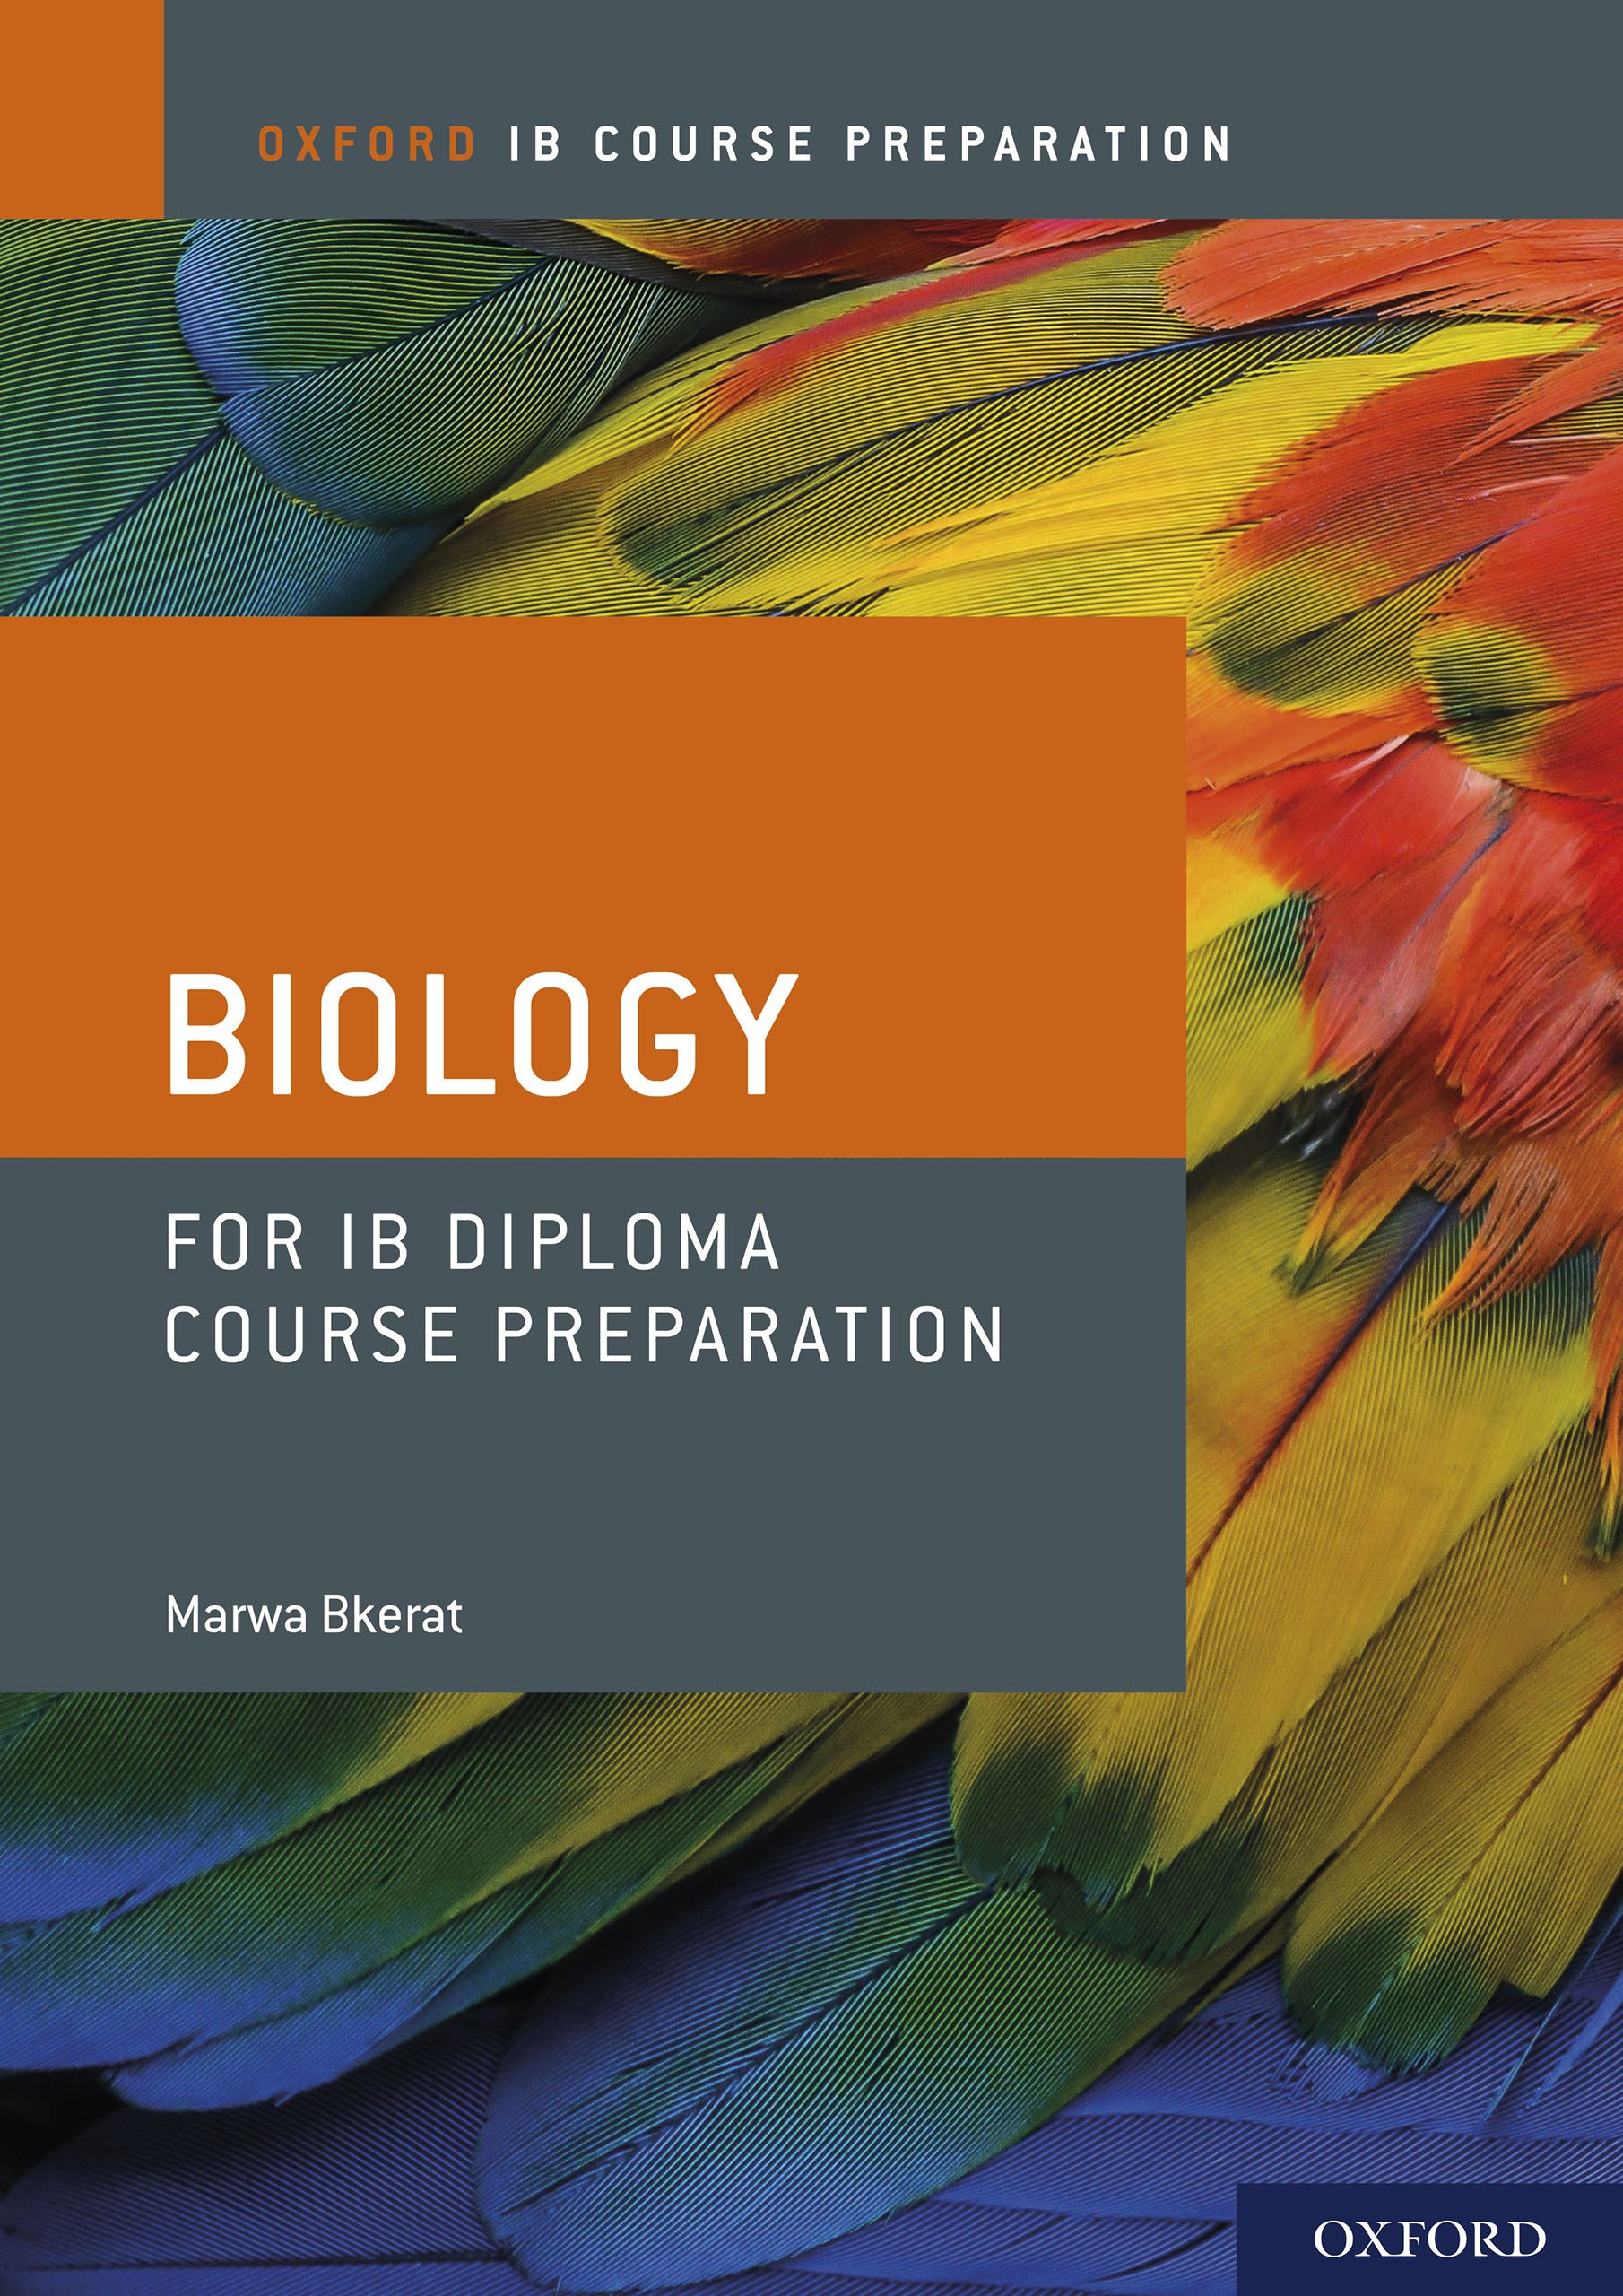 [PDF] Ebook Oxford IB Course Preparation Biology for IB Diploma